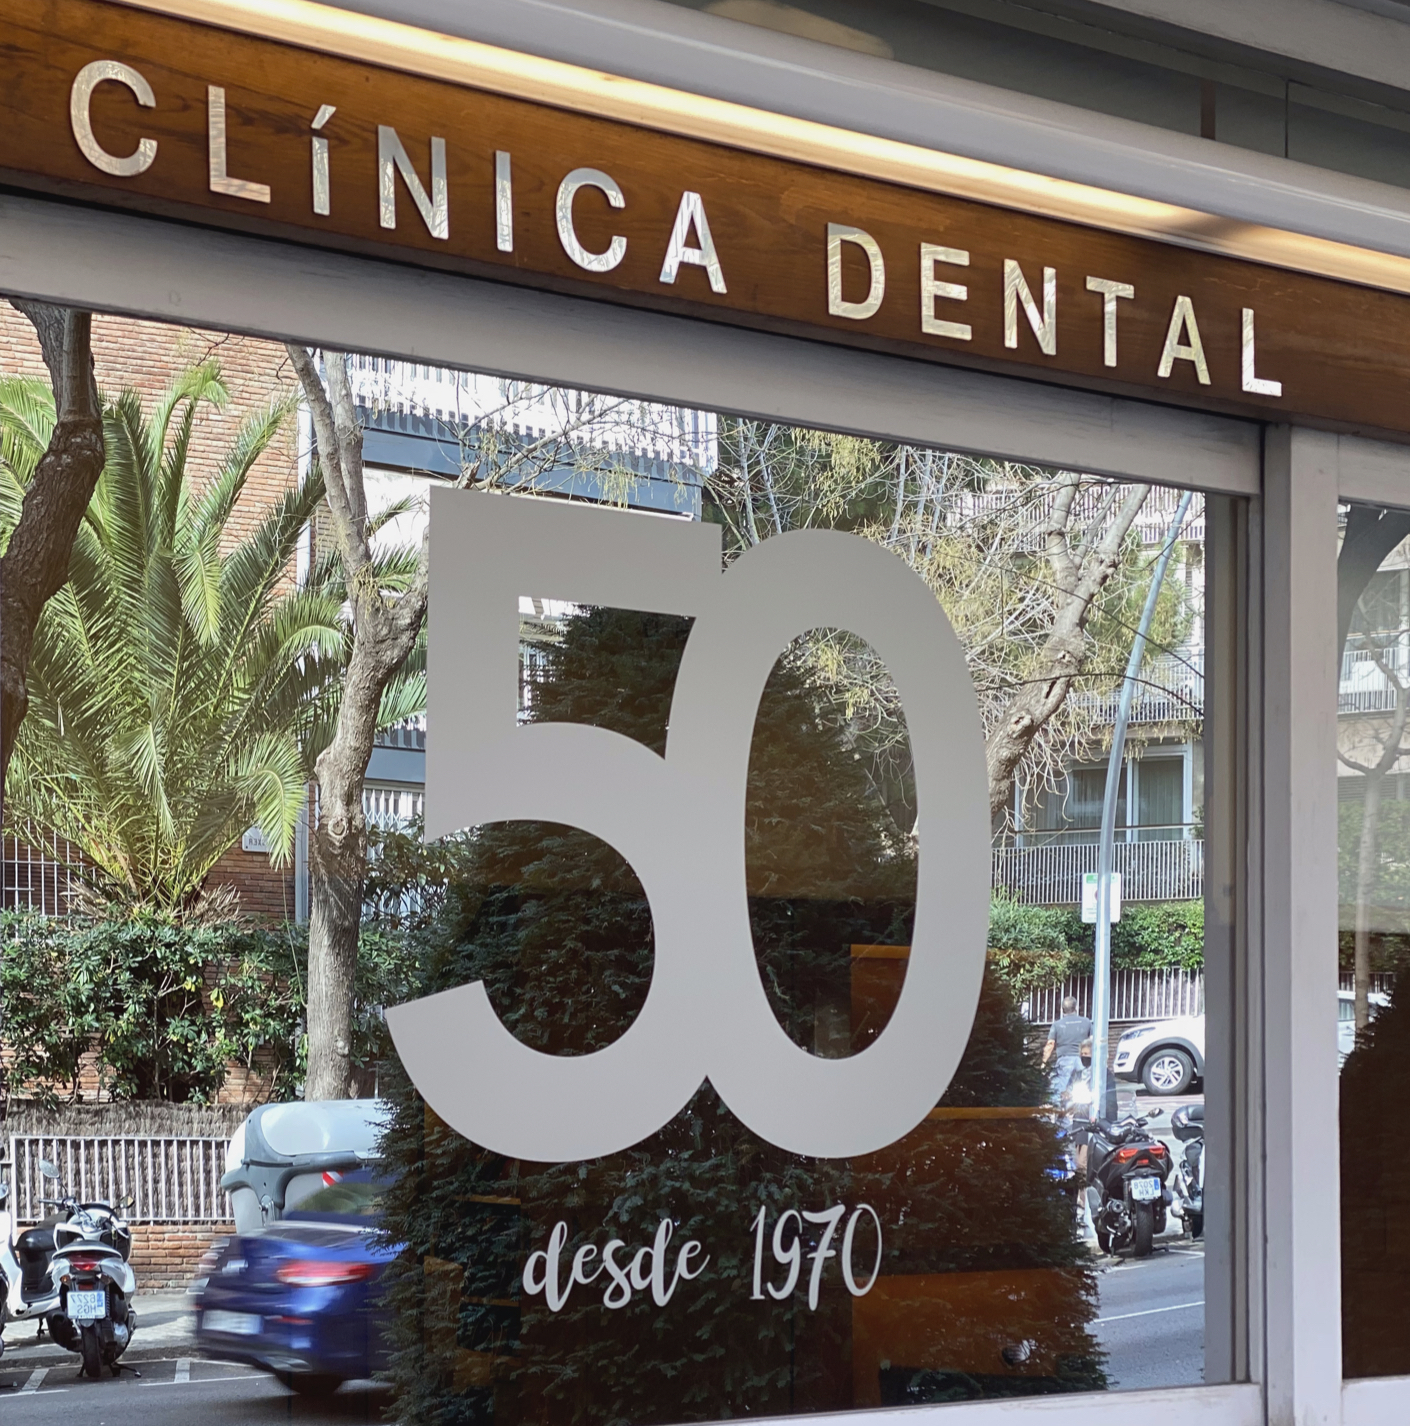 Stoma Dental Clinic, since 1970